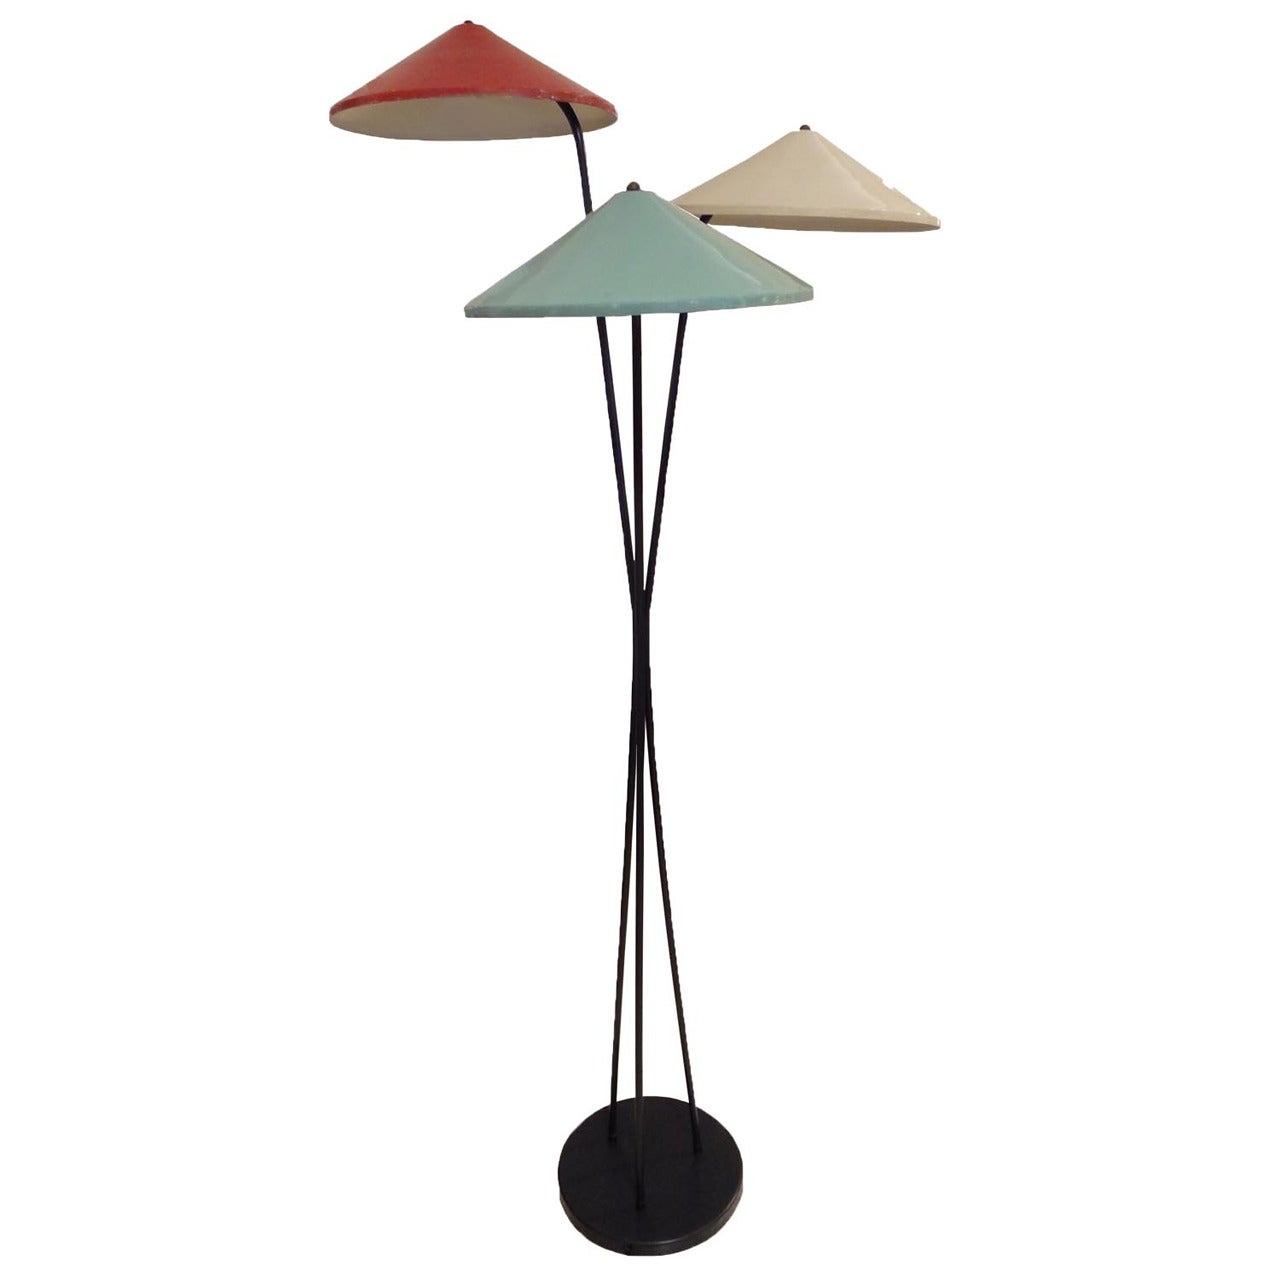 Mid-Century Modernist Floor Lamp, style of Arteluce For Sale